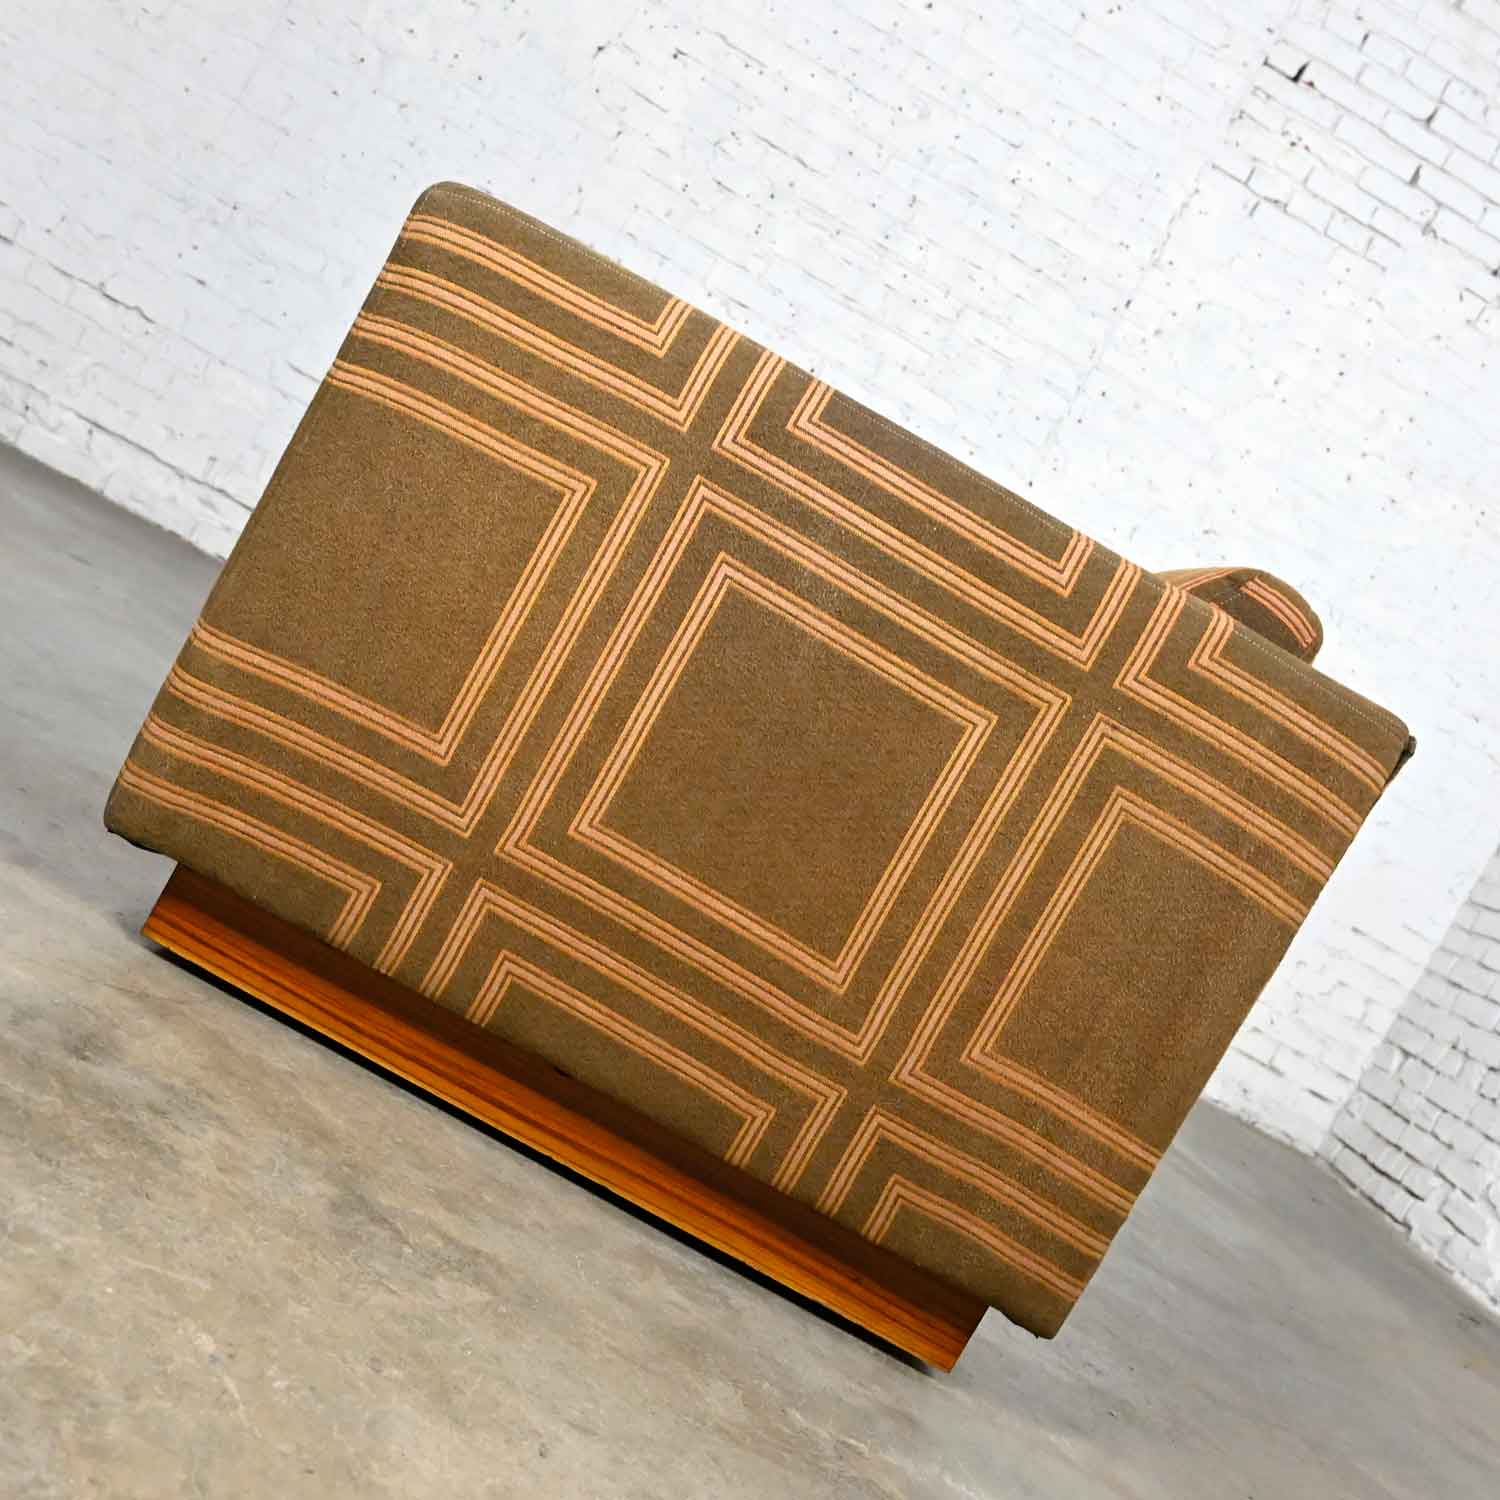 Vintage Modern Brown & Orange Tuxedo Love Seat Sofa on Platform Base by Milo Baughman for Thayer Coggin's Designer's Group Collection